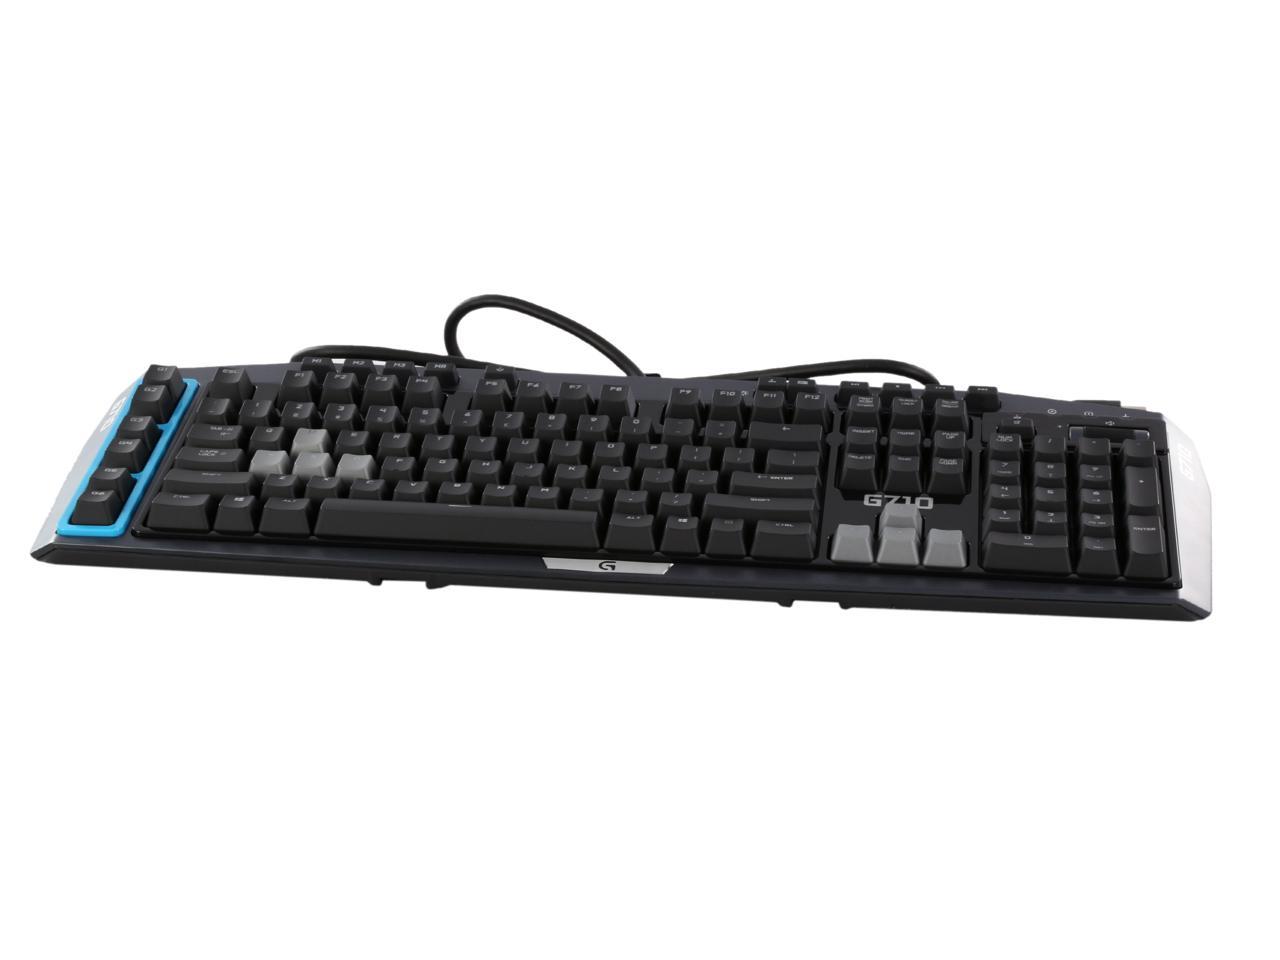 Logitech G710 Mechanical Usb Gaming Keyboard